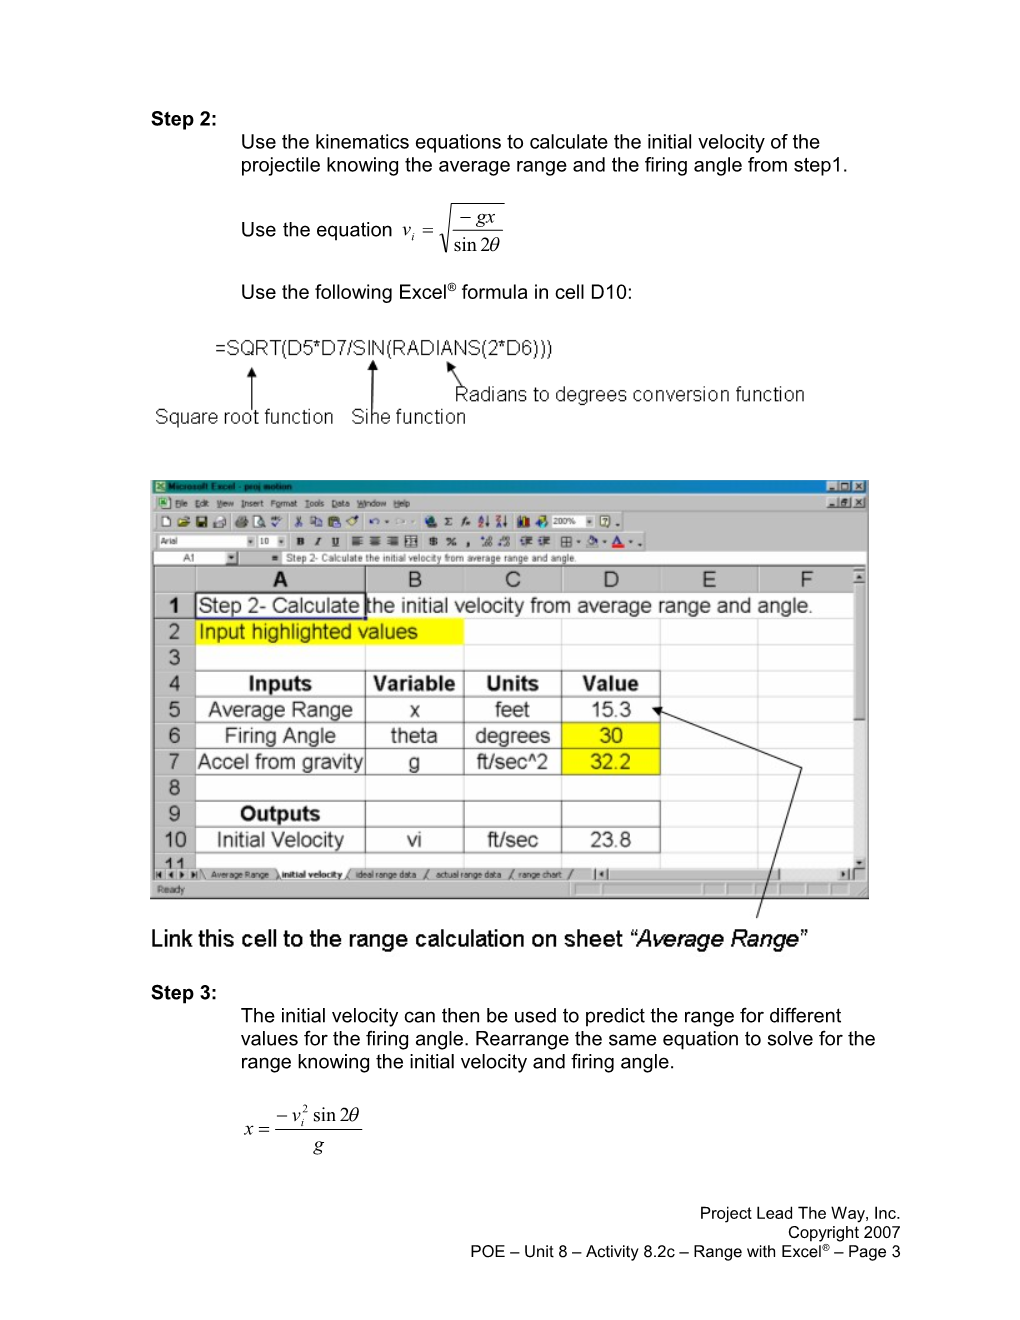 Activity 8.2C - Range with Excel